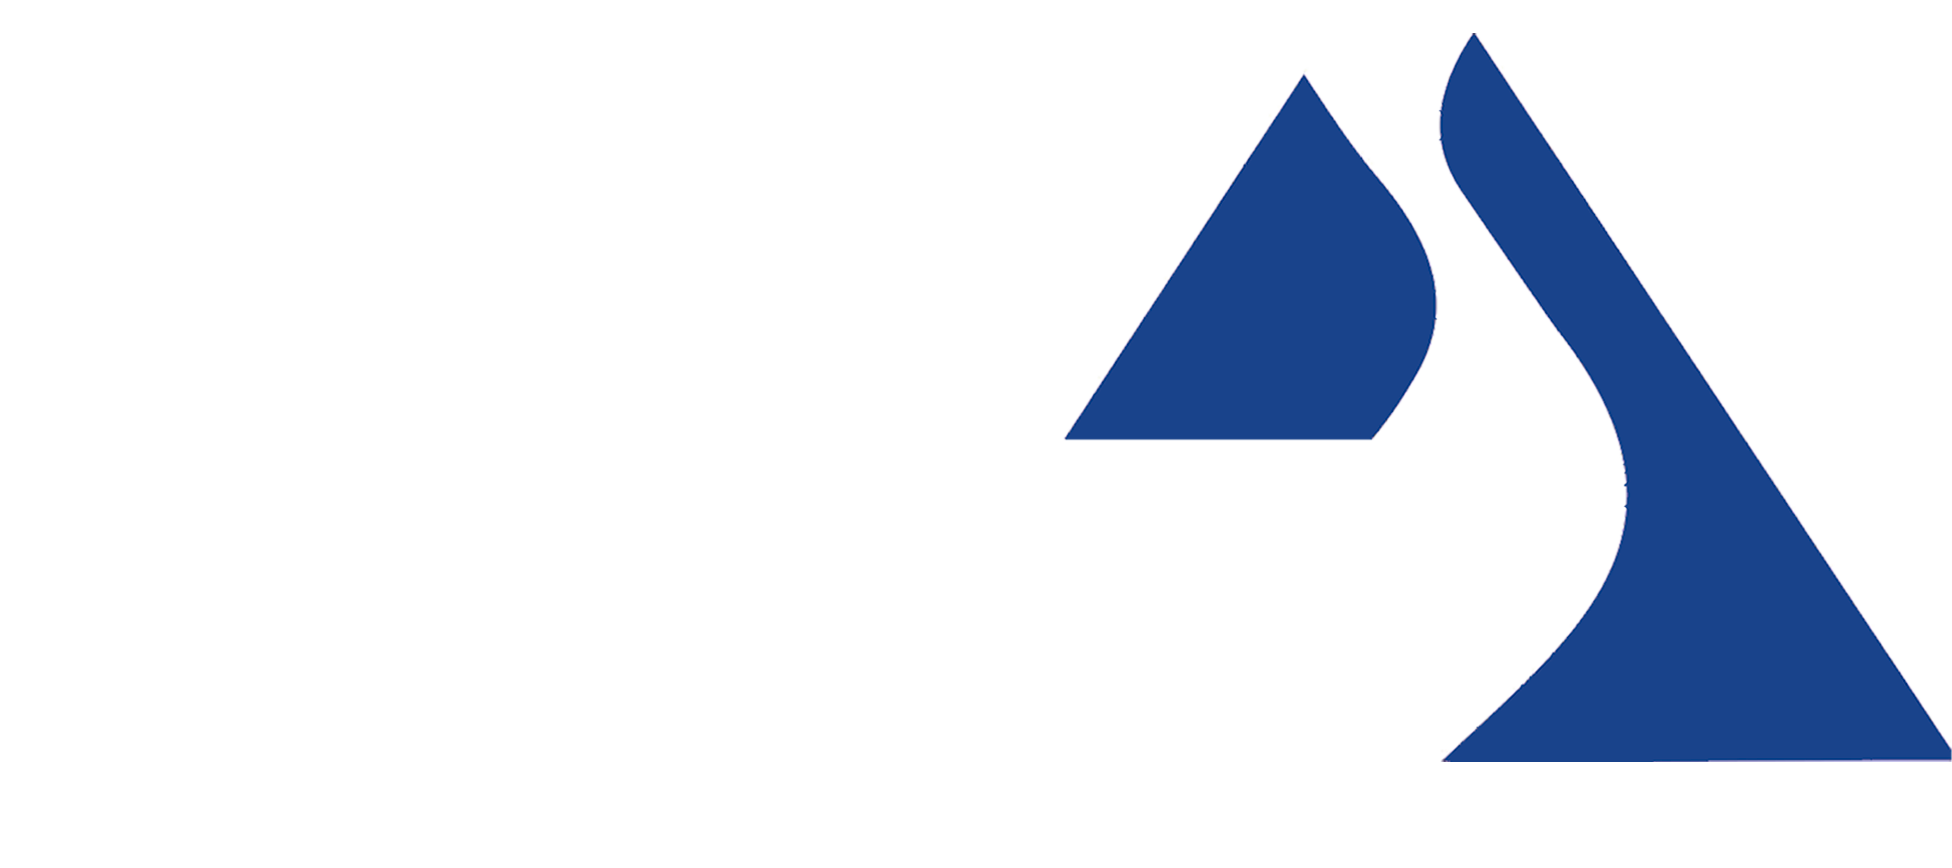 Ute Schäfer - Steuerberater